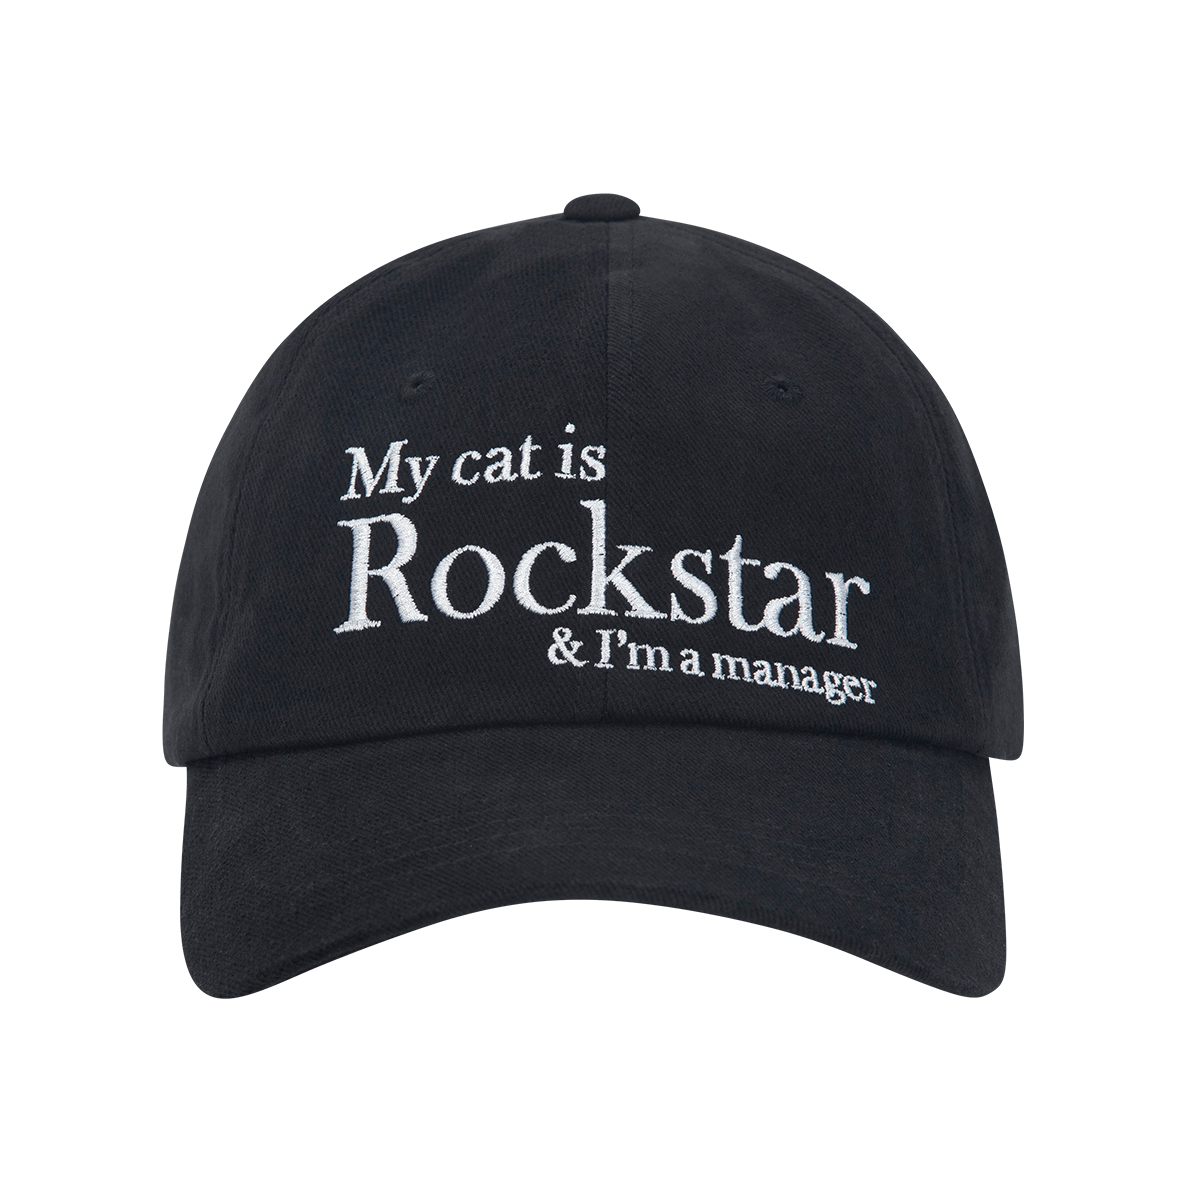 My cat is Rockstar Baseball cap (Black)